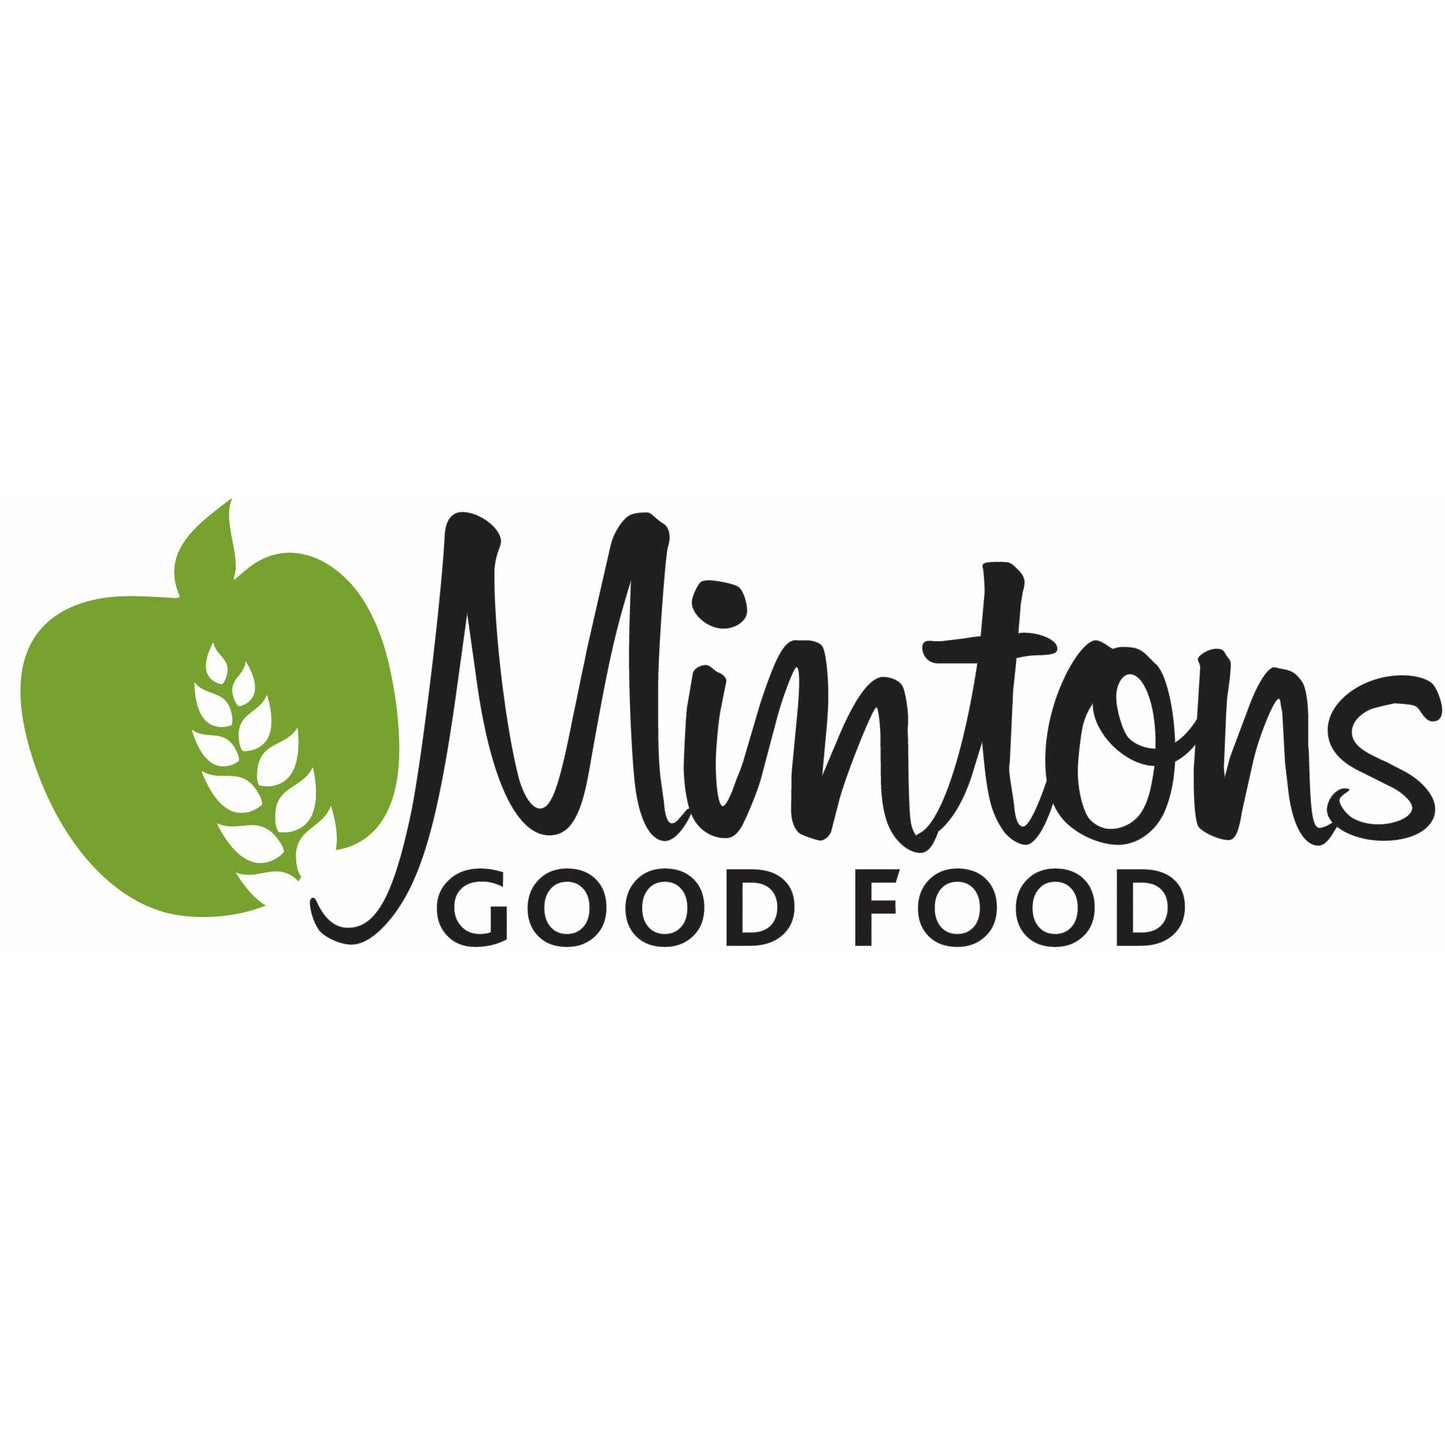 Mintons Good Food, A1 Deluxe Muesli Mix               Size - 5.0 Kg